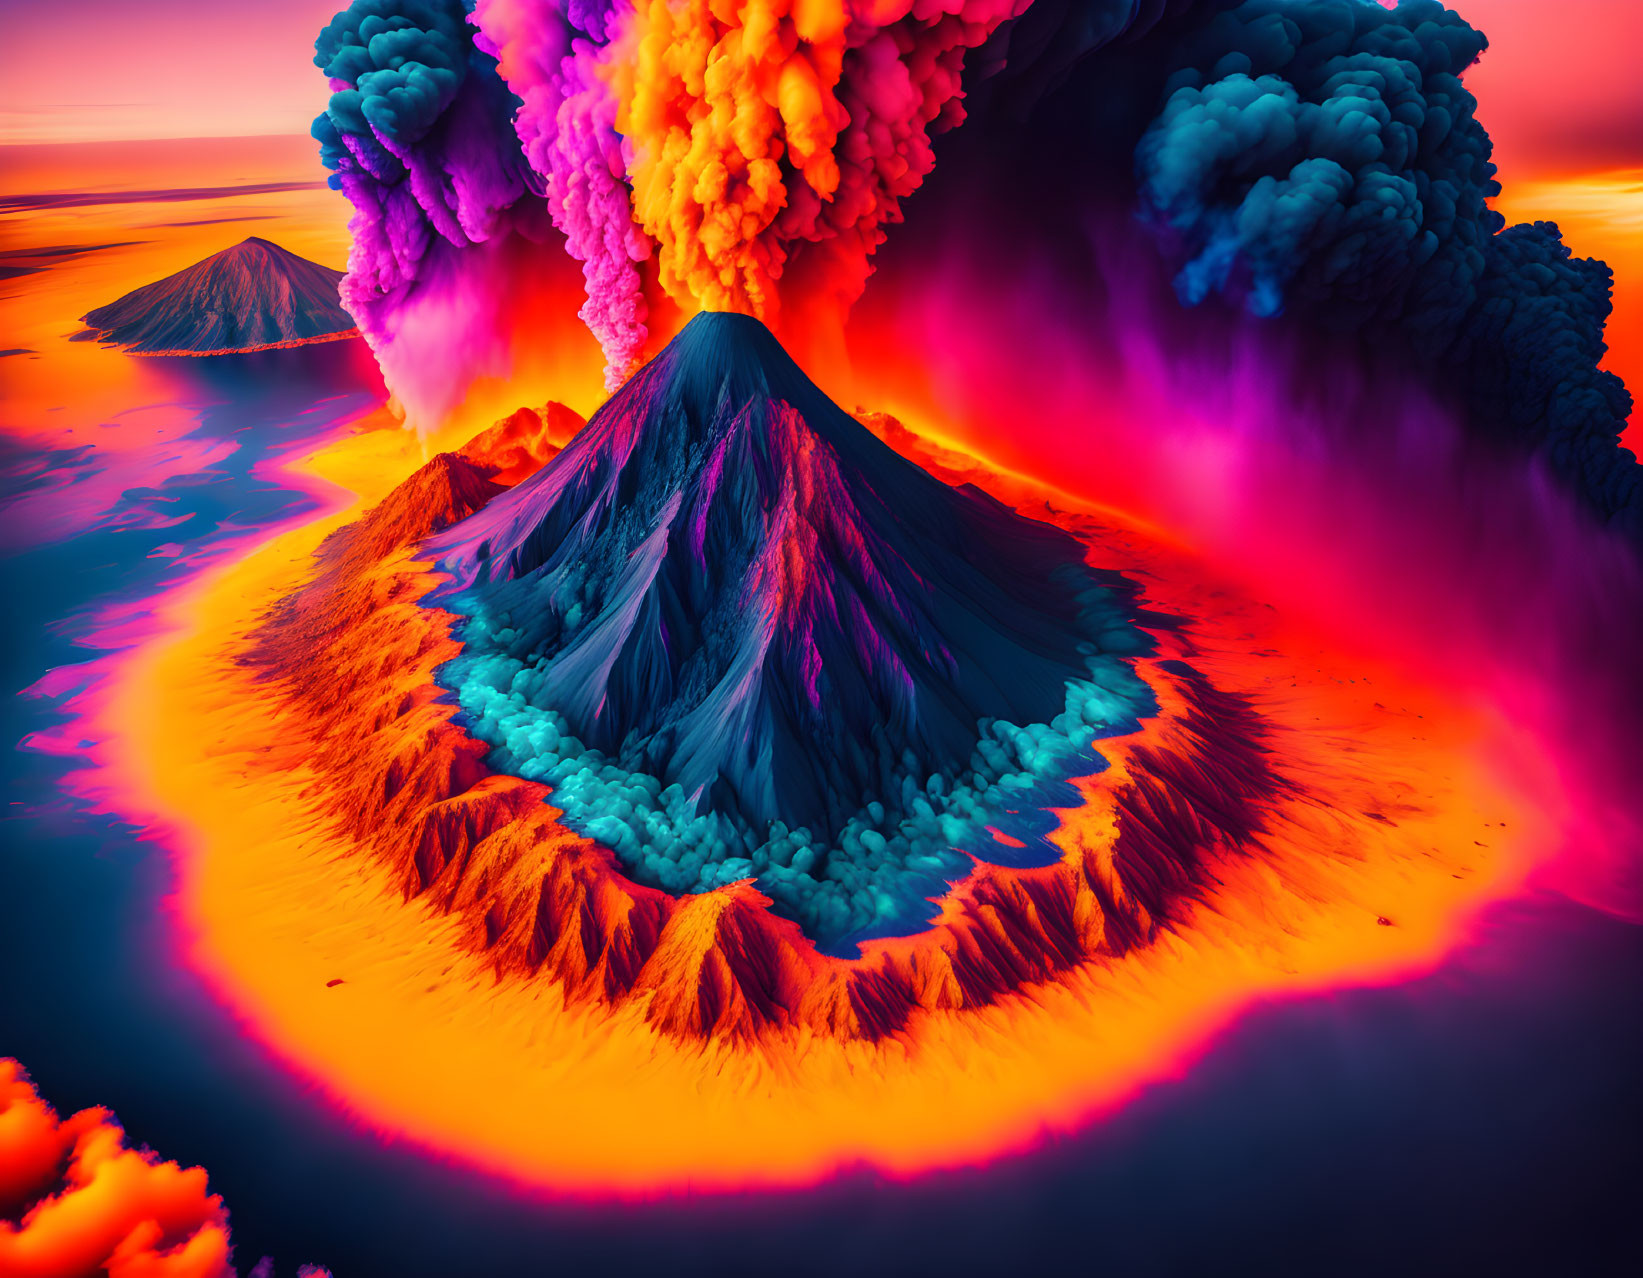 Colorful Volcano Eruption in Surreal Landscape